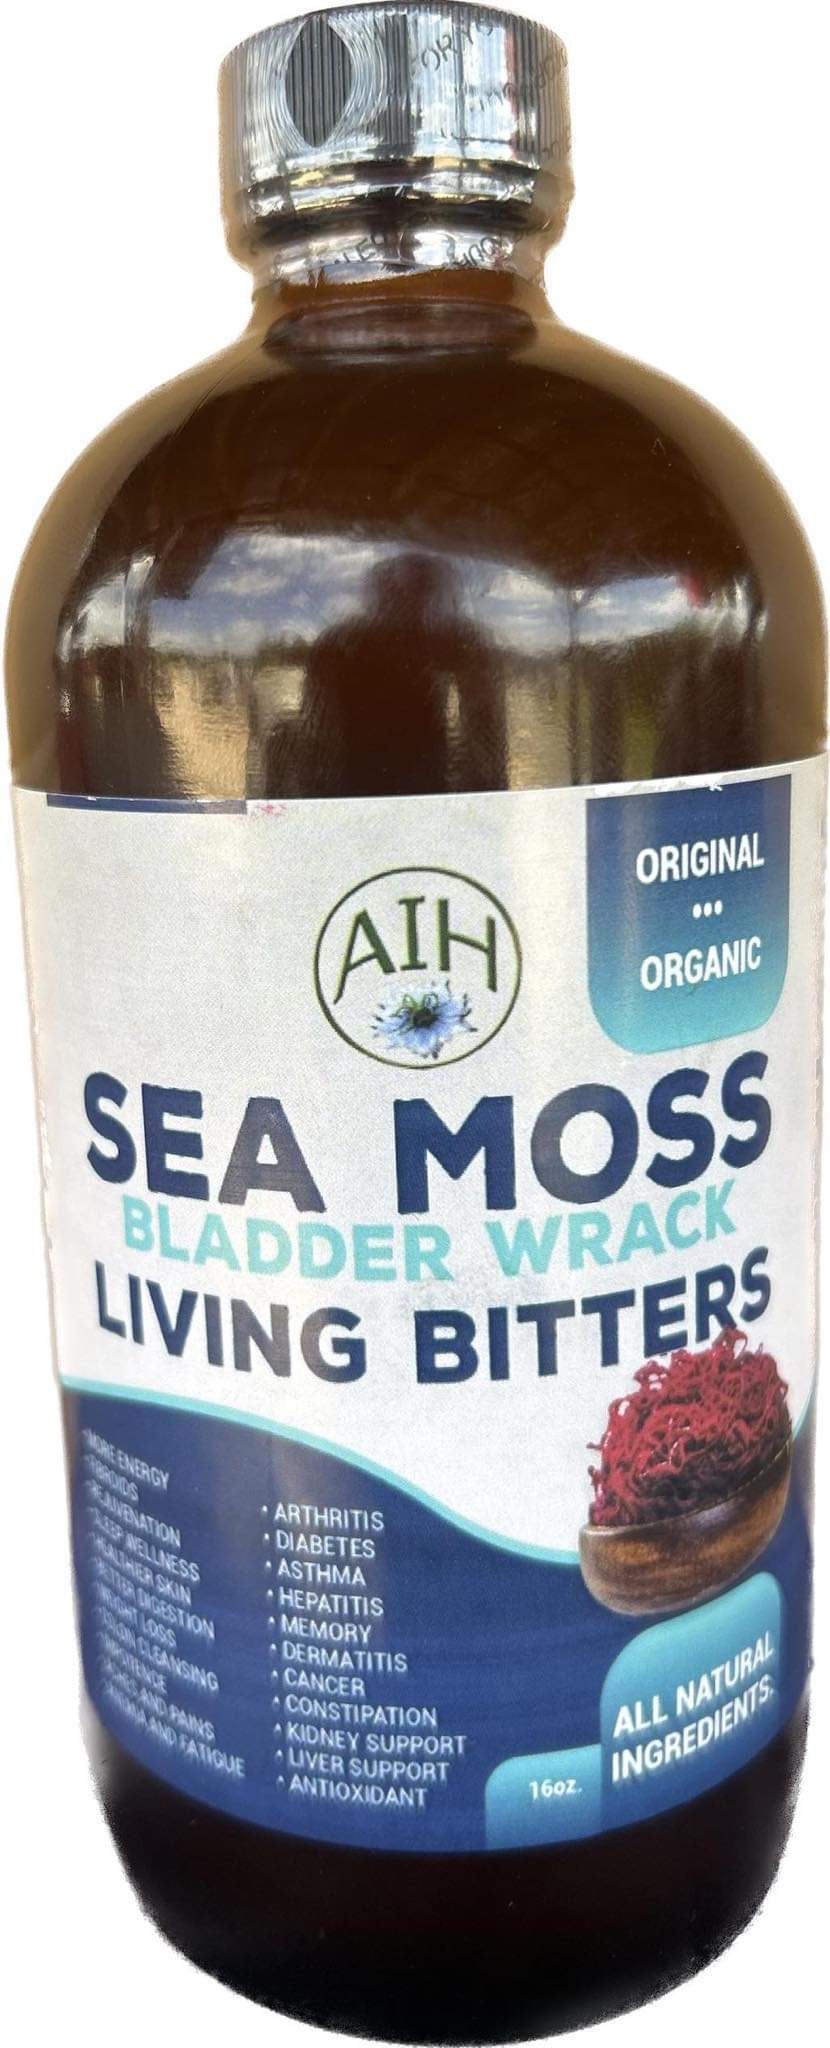 Sea moss Bladder Wrack Living Bitters